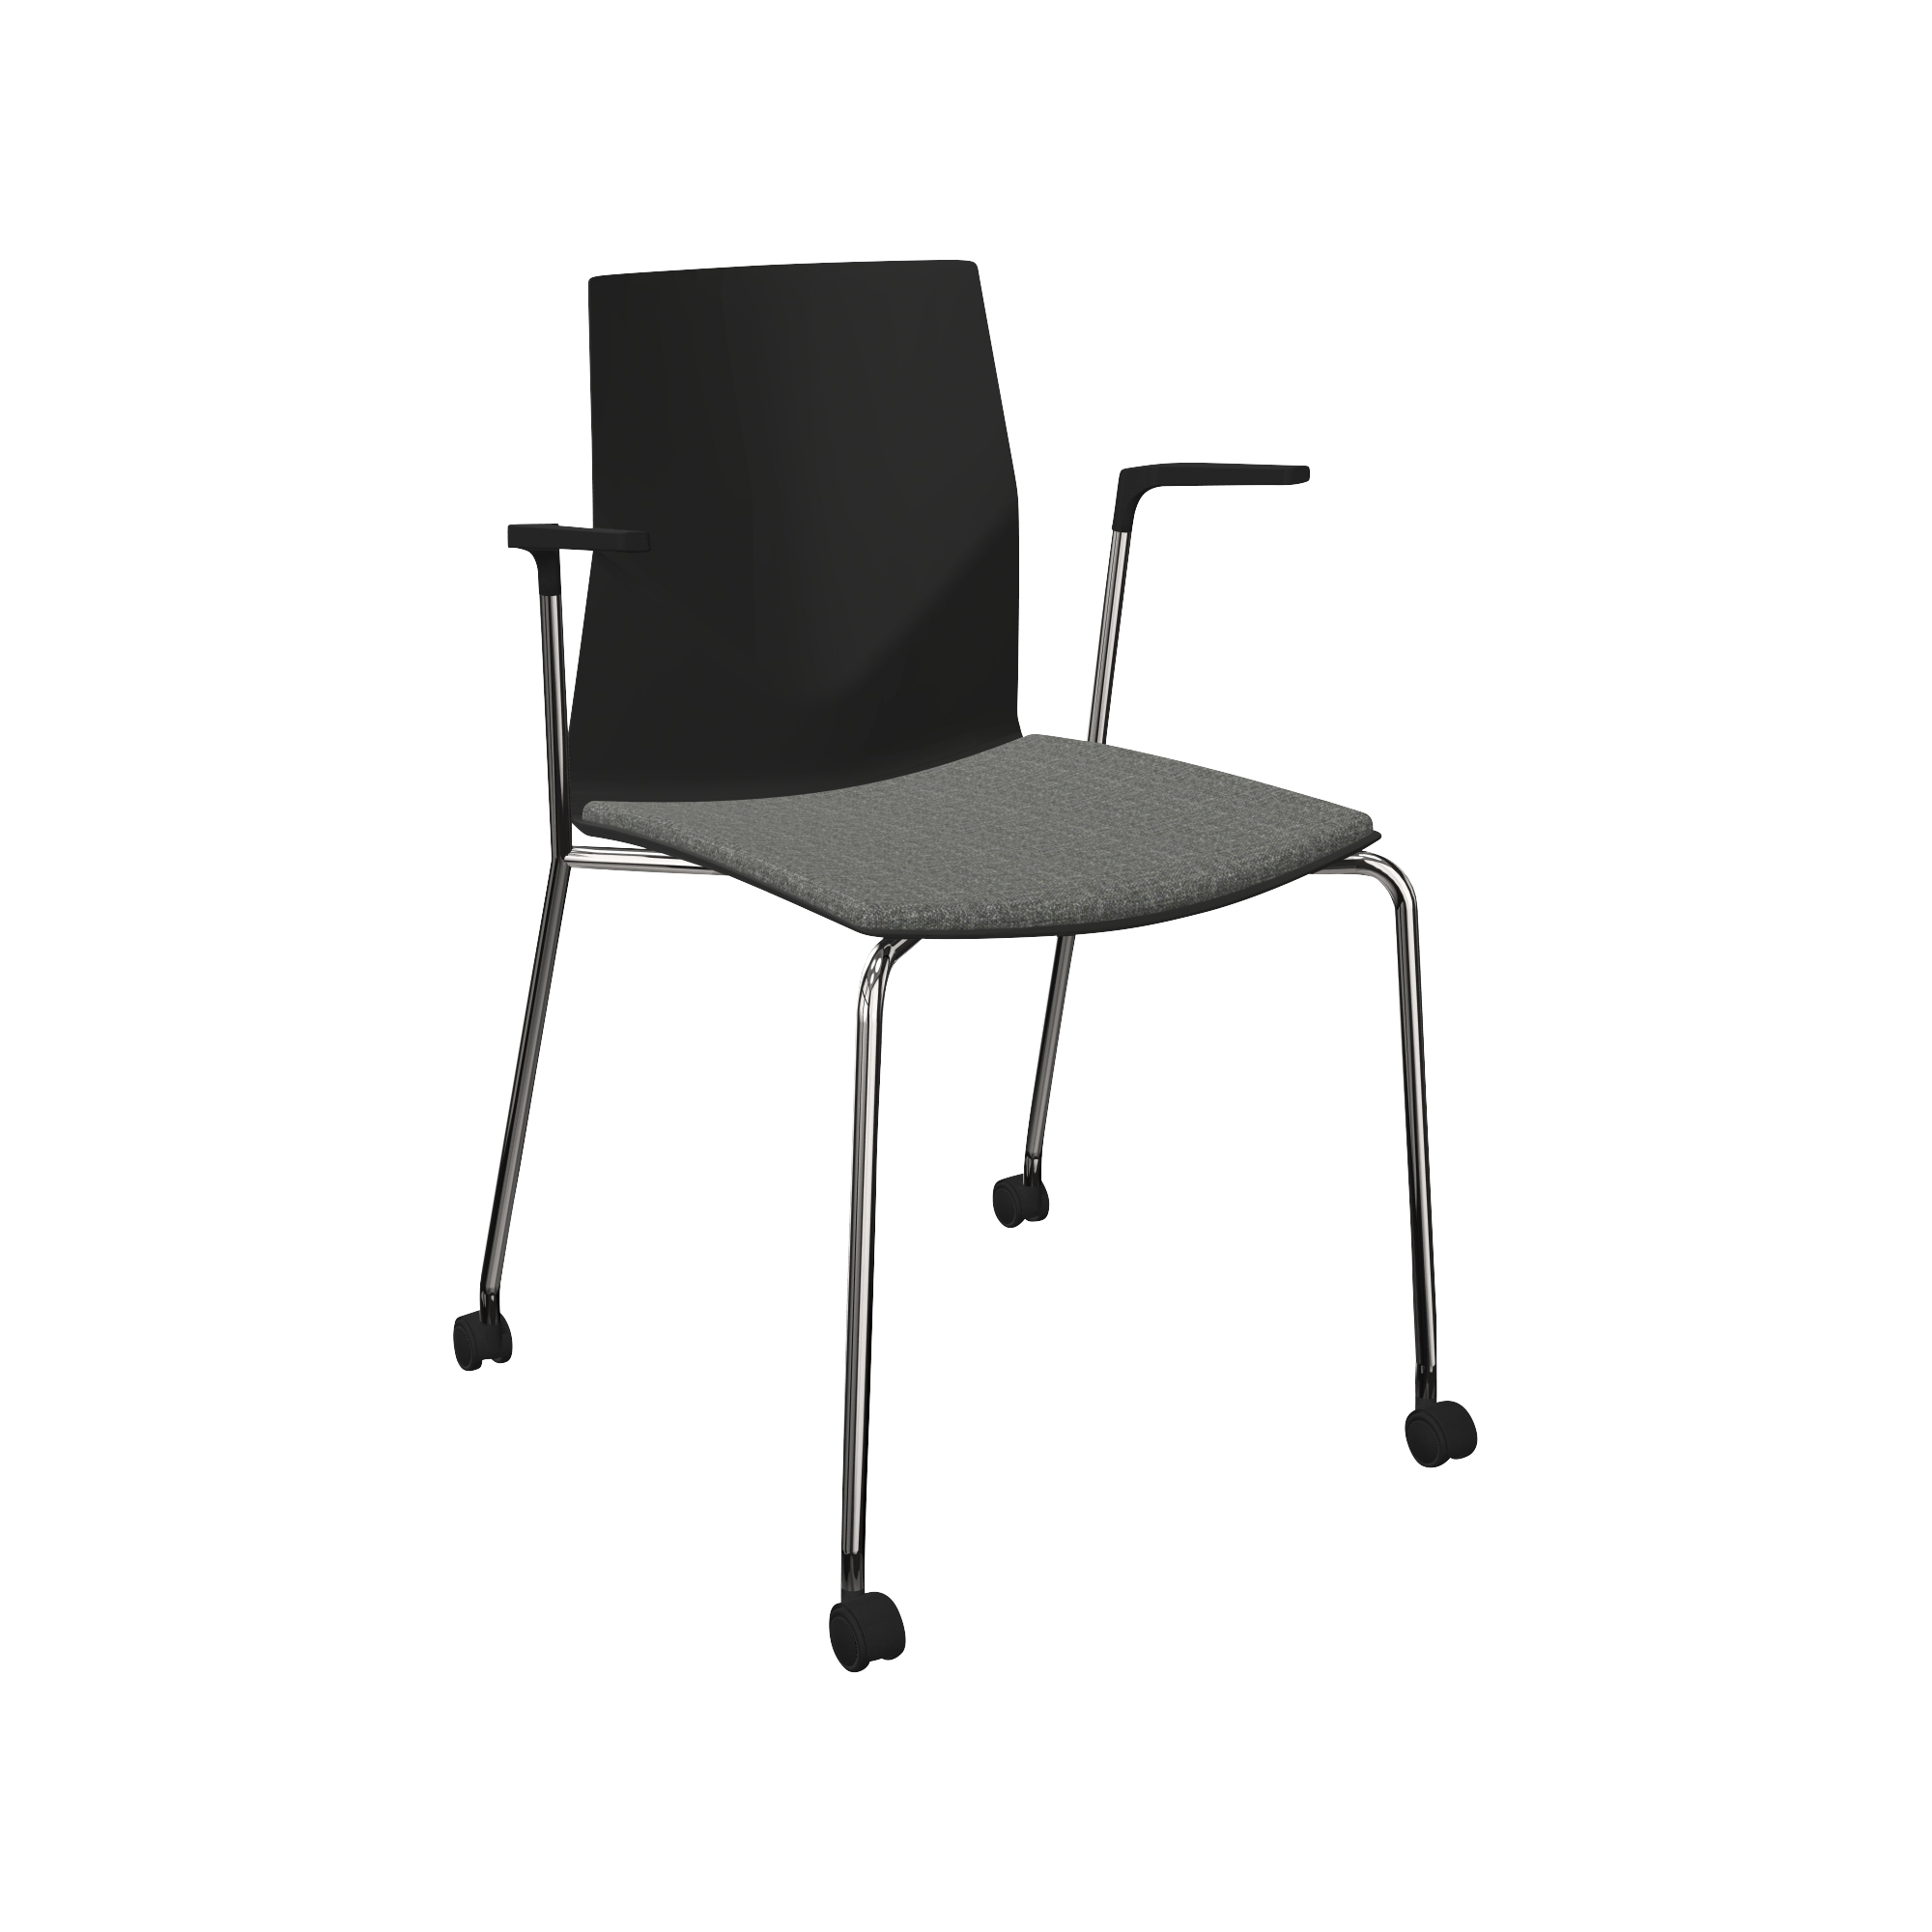 designer desk chair with wheels